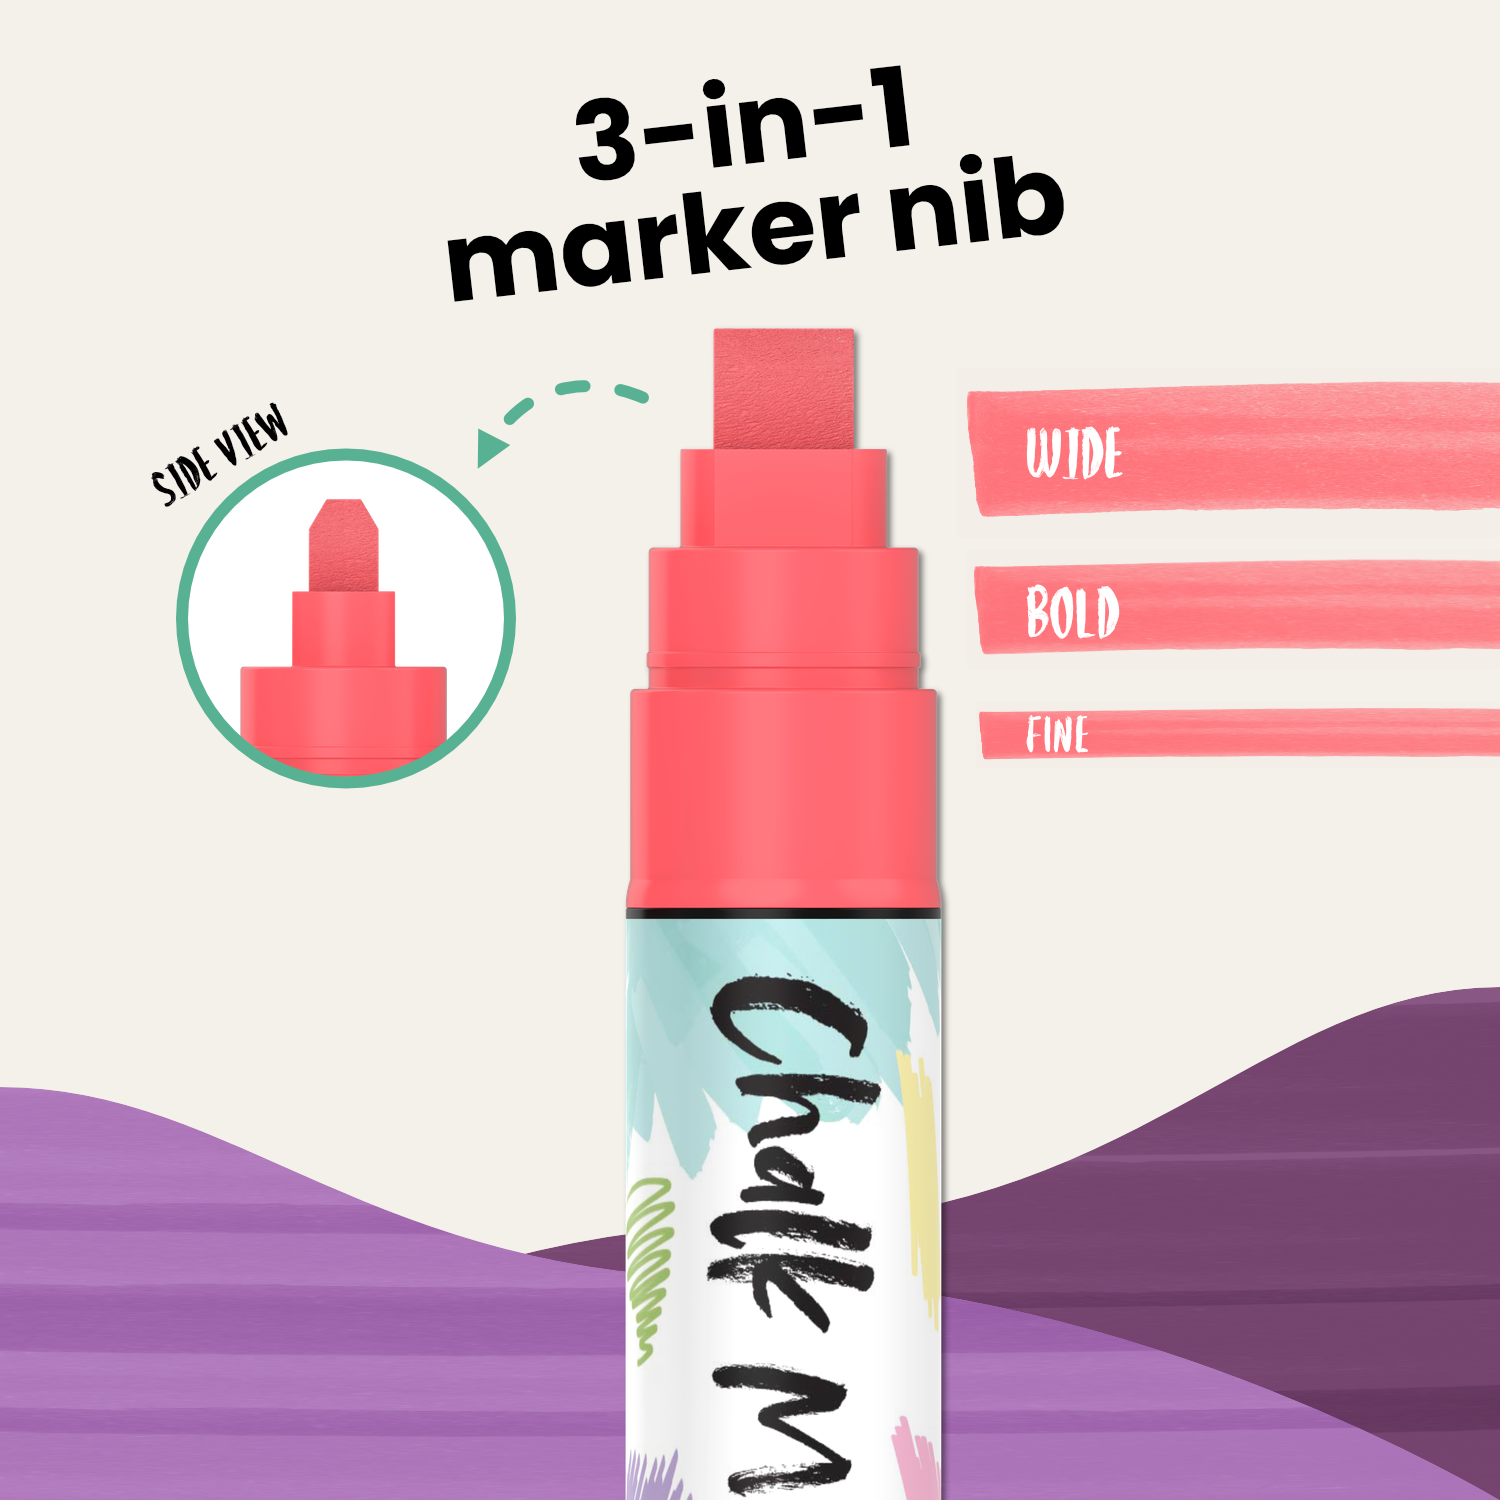 Chalkola Liquid Chalk Markers Erasable (10 Pack) W/Gold & Silver - Washable Paint Chalk Pens for Chalkboard Signs, Blackboard, Car Window, Bistro, GLA